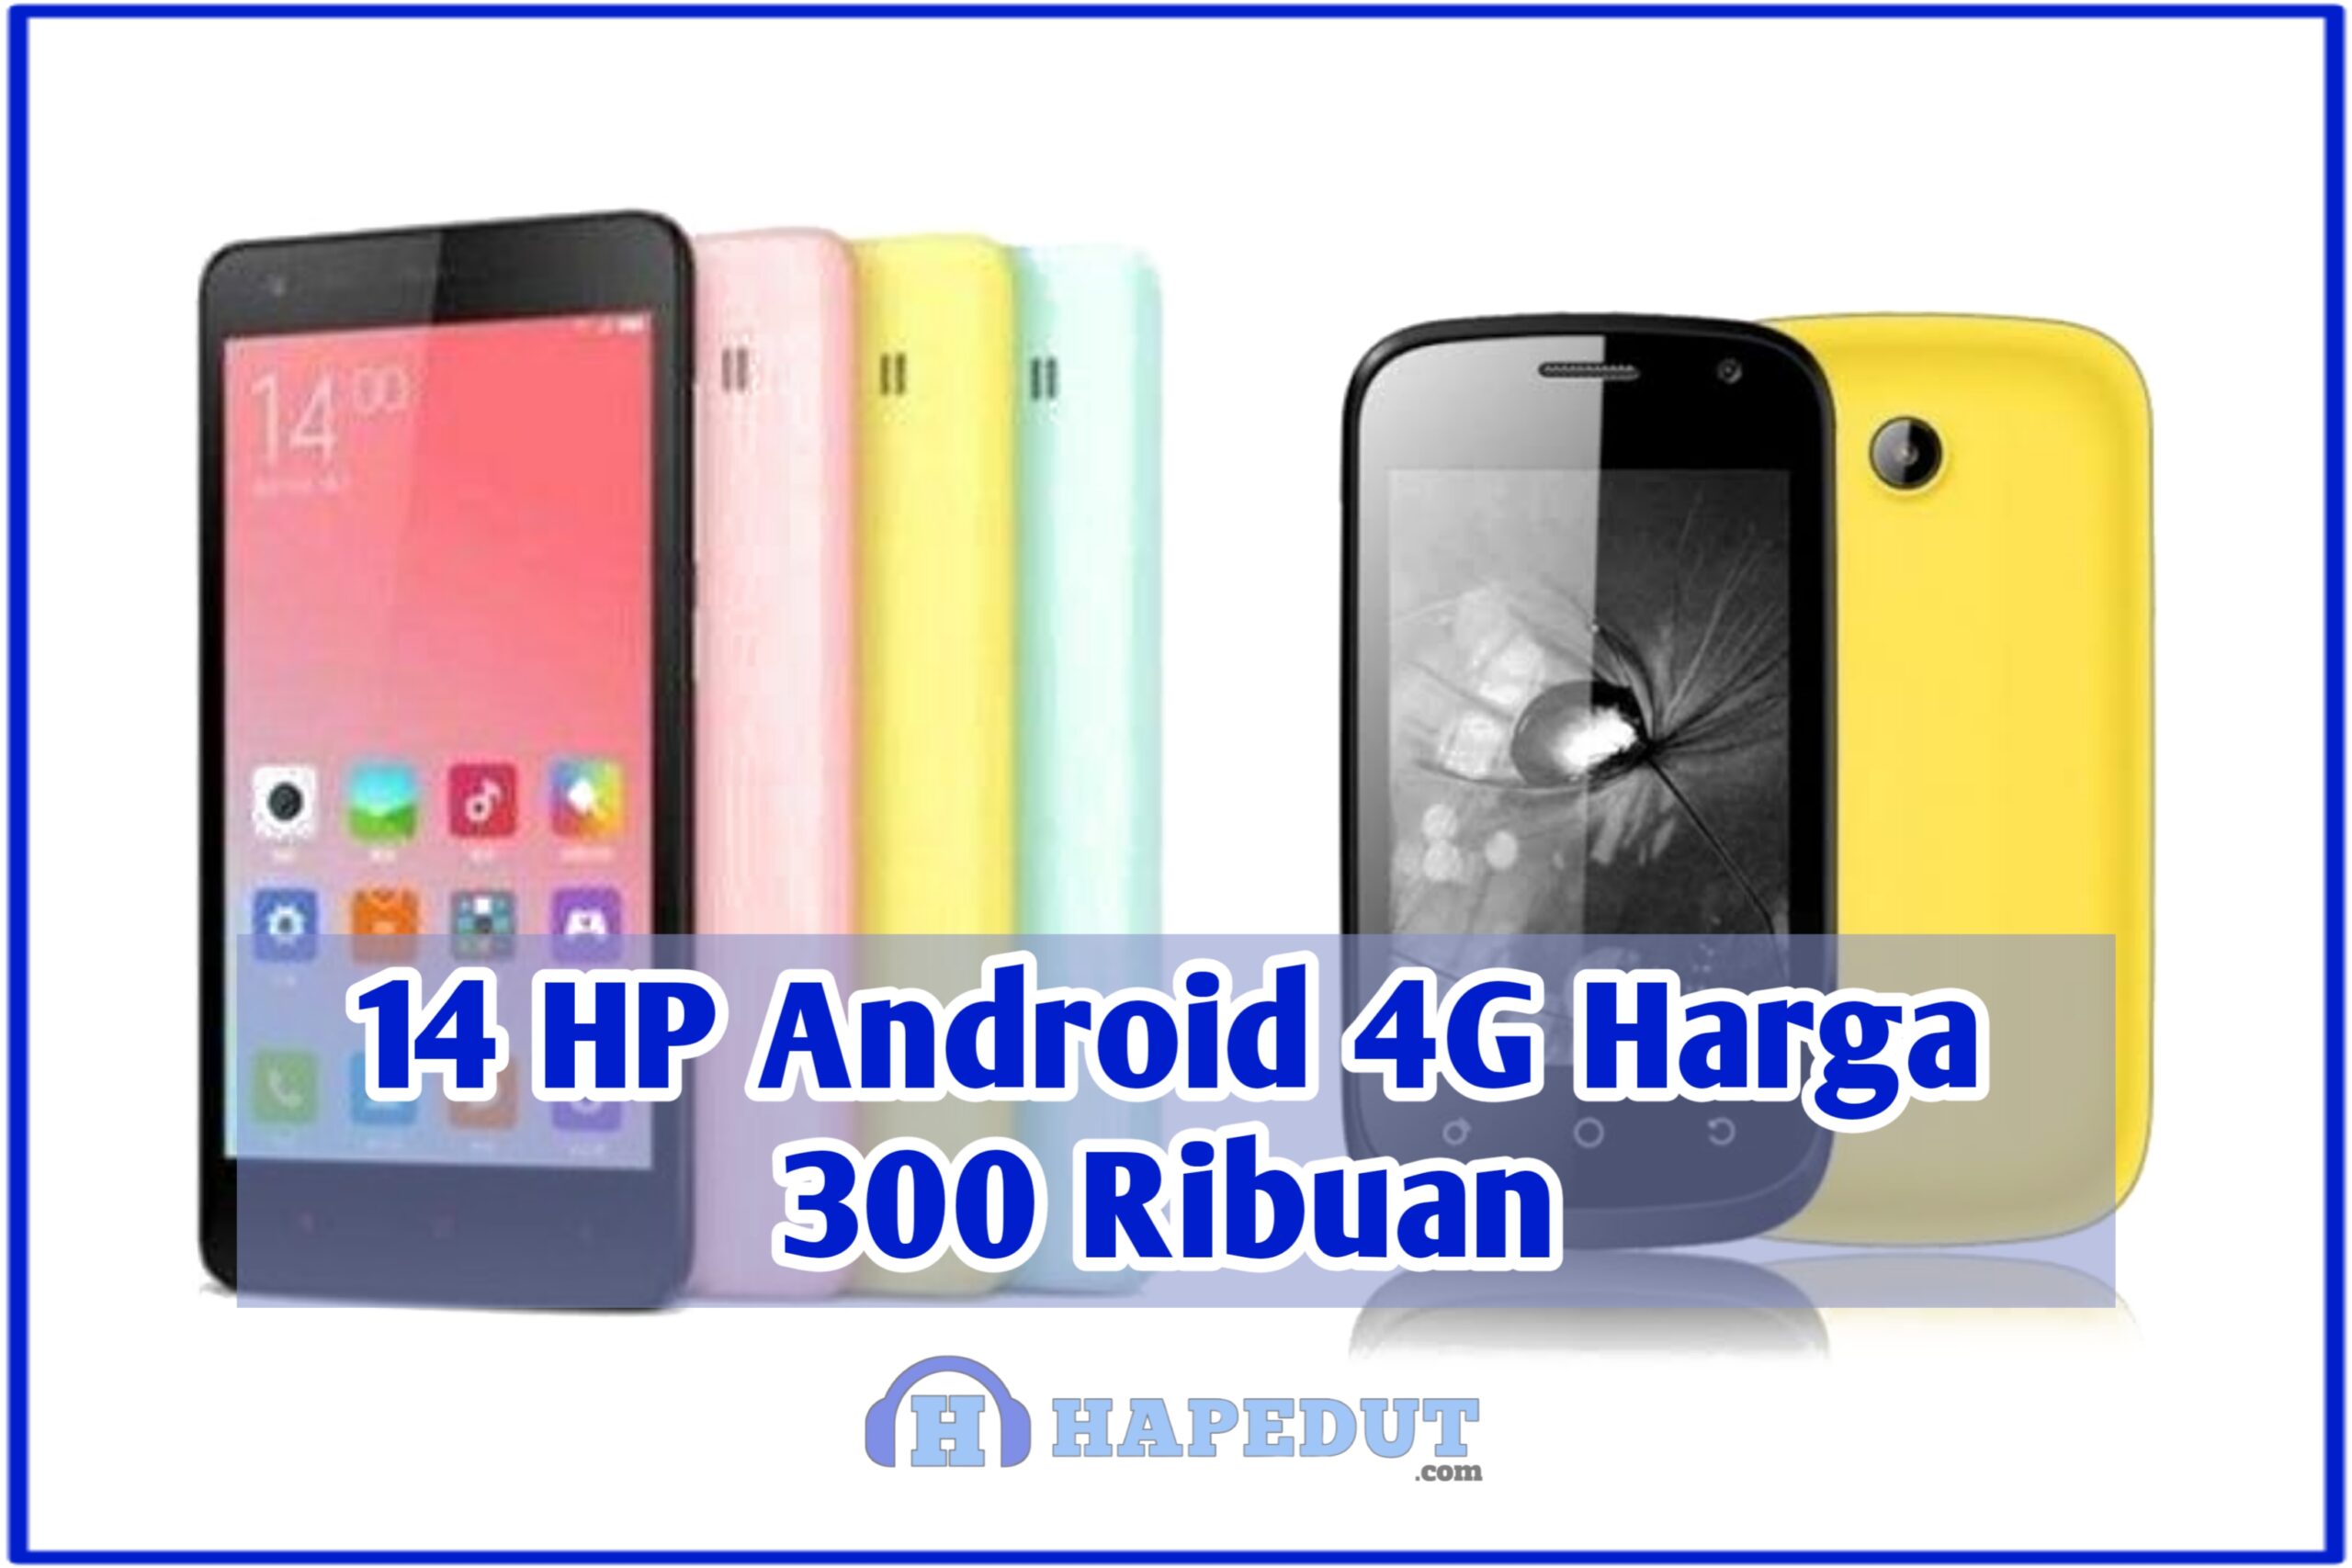 14 HP Android 4G Harga 300 Ribuan : Hapedut